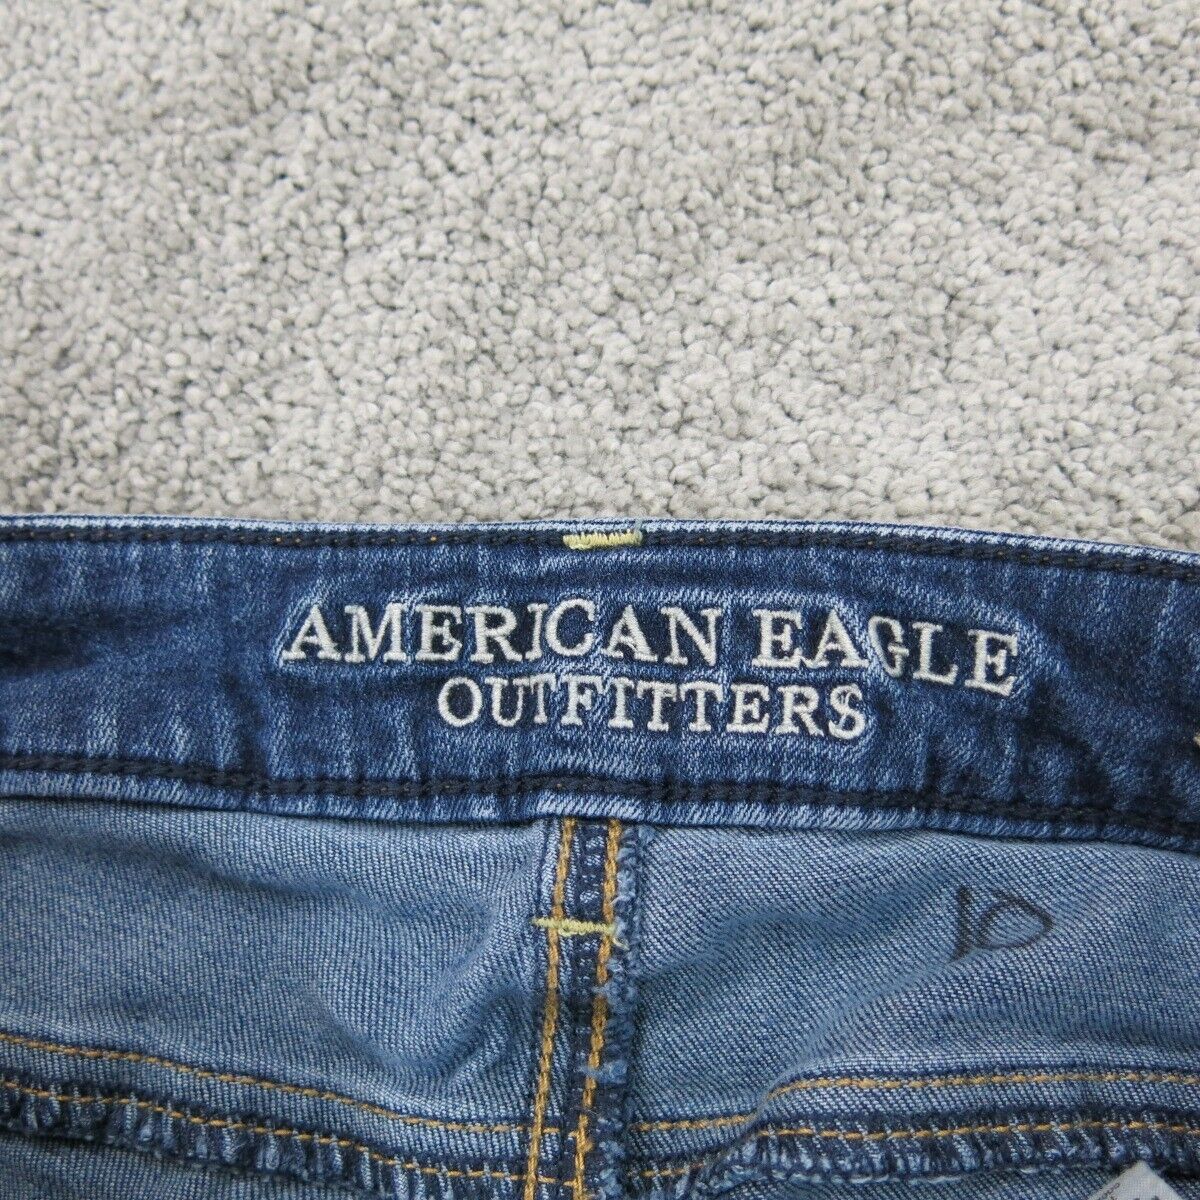 American Eagle size 4 stretch pants